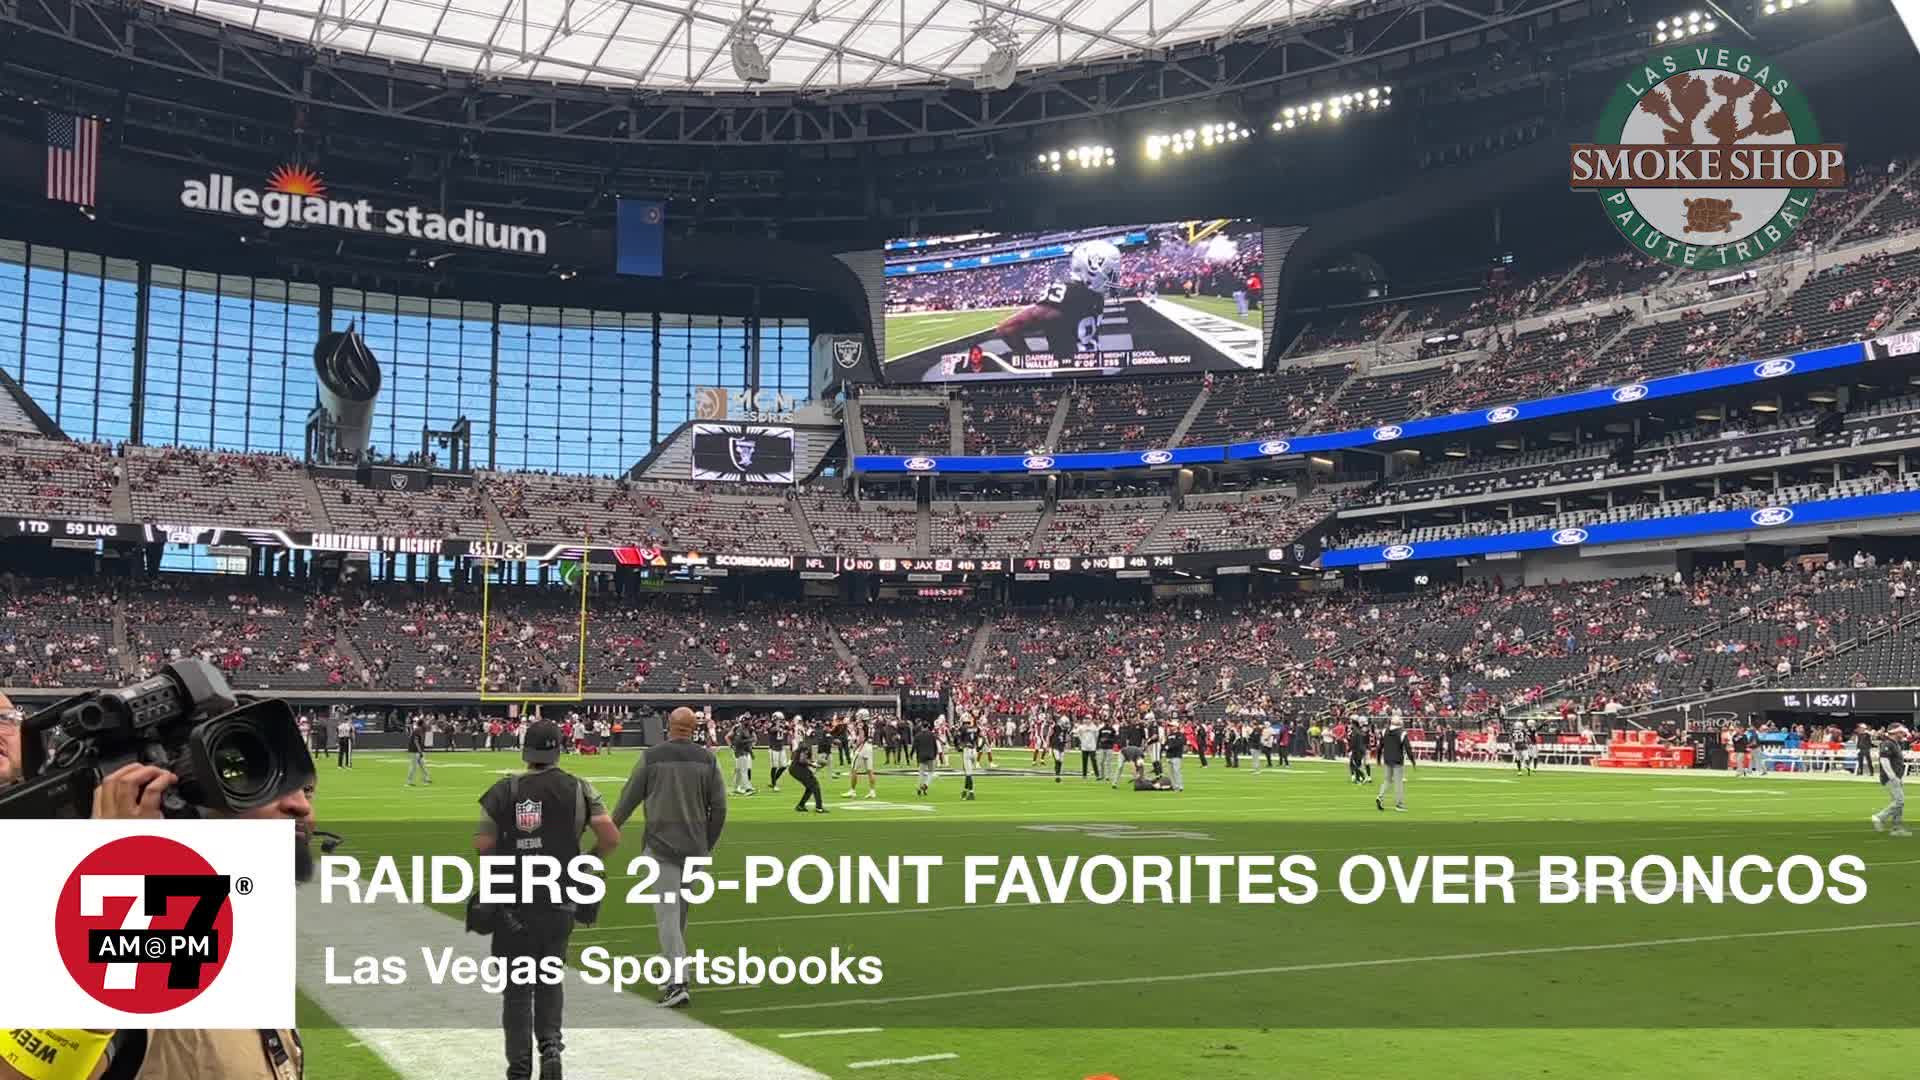 Raiders 2.5-Point favorites over Broncos